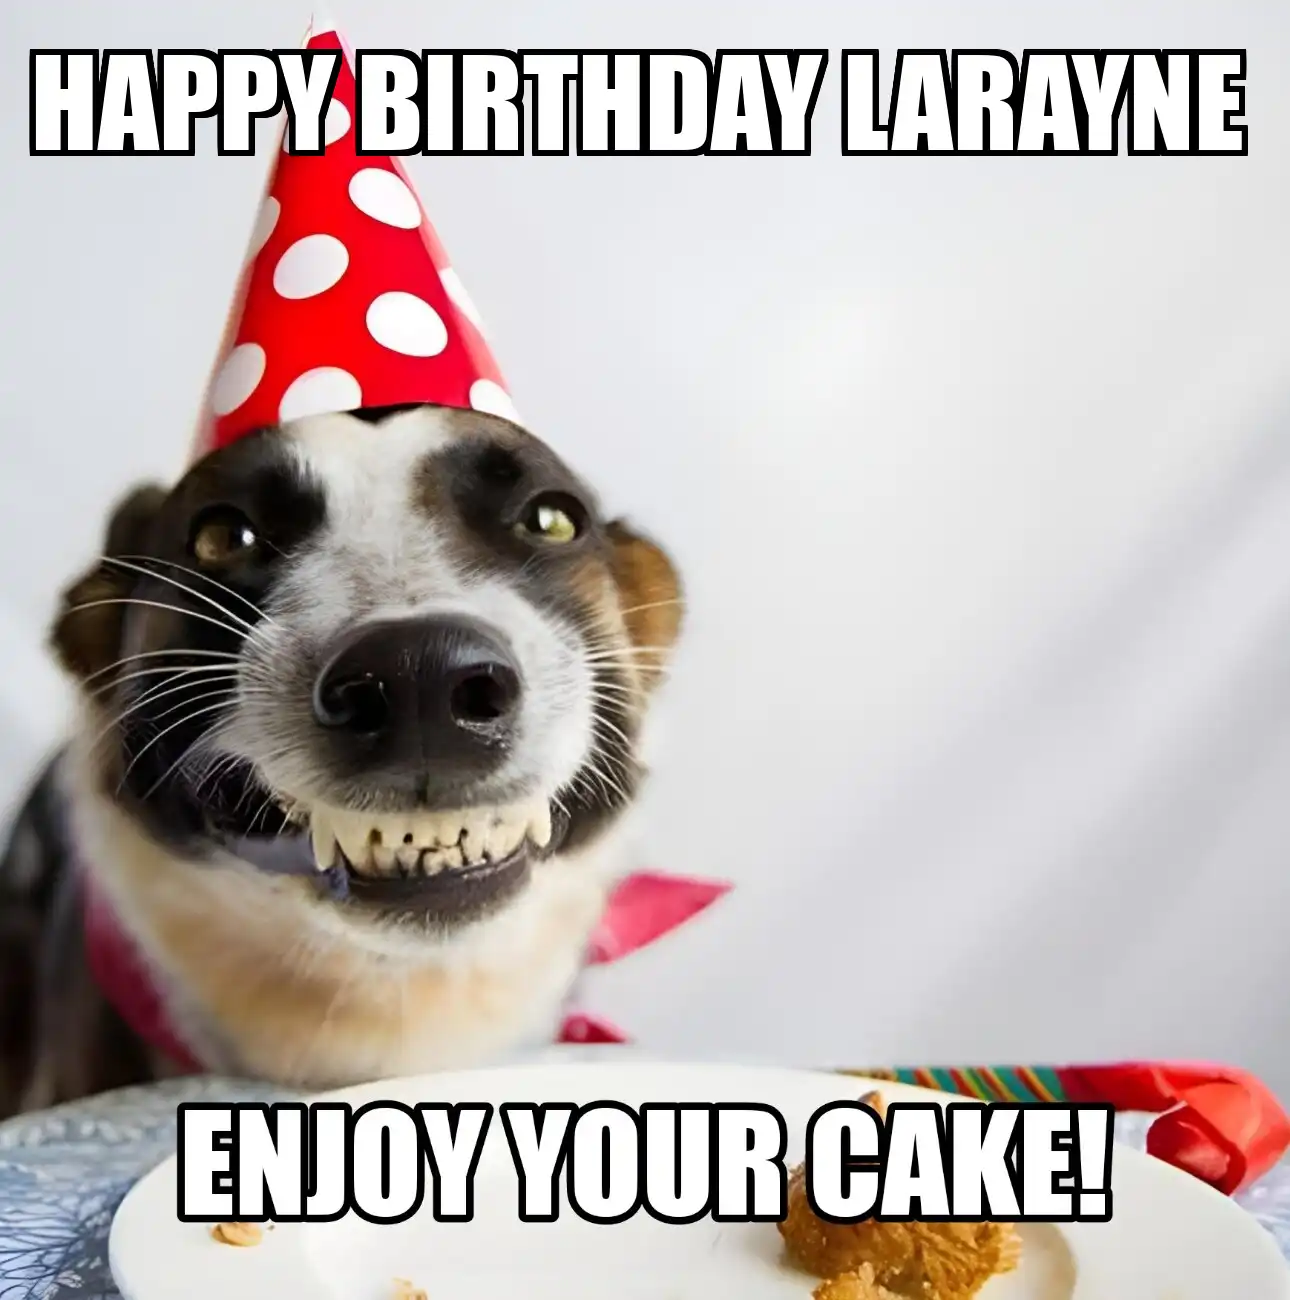 Happy Birthday Larayne Enjoy Your Cake Dog Meme